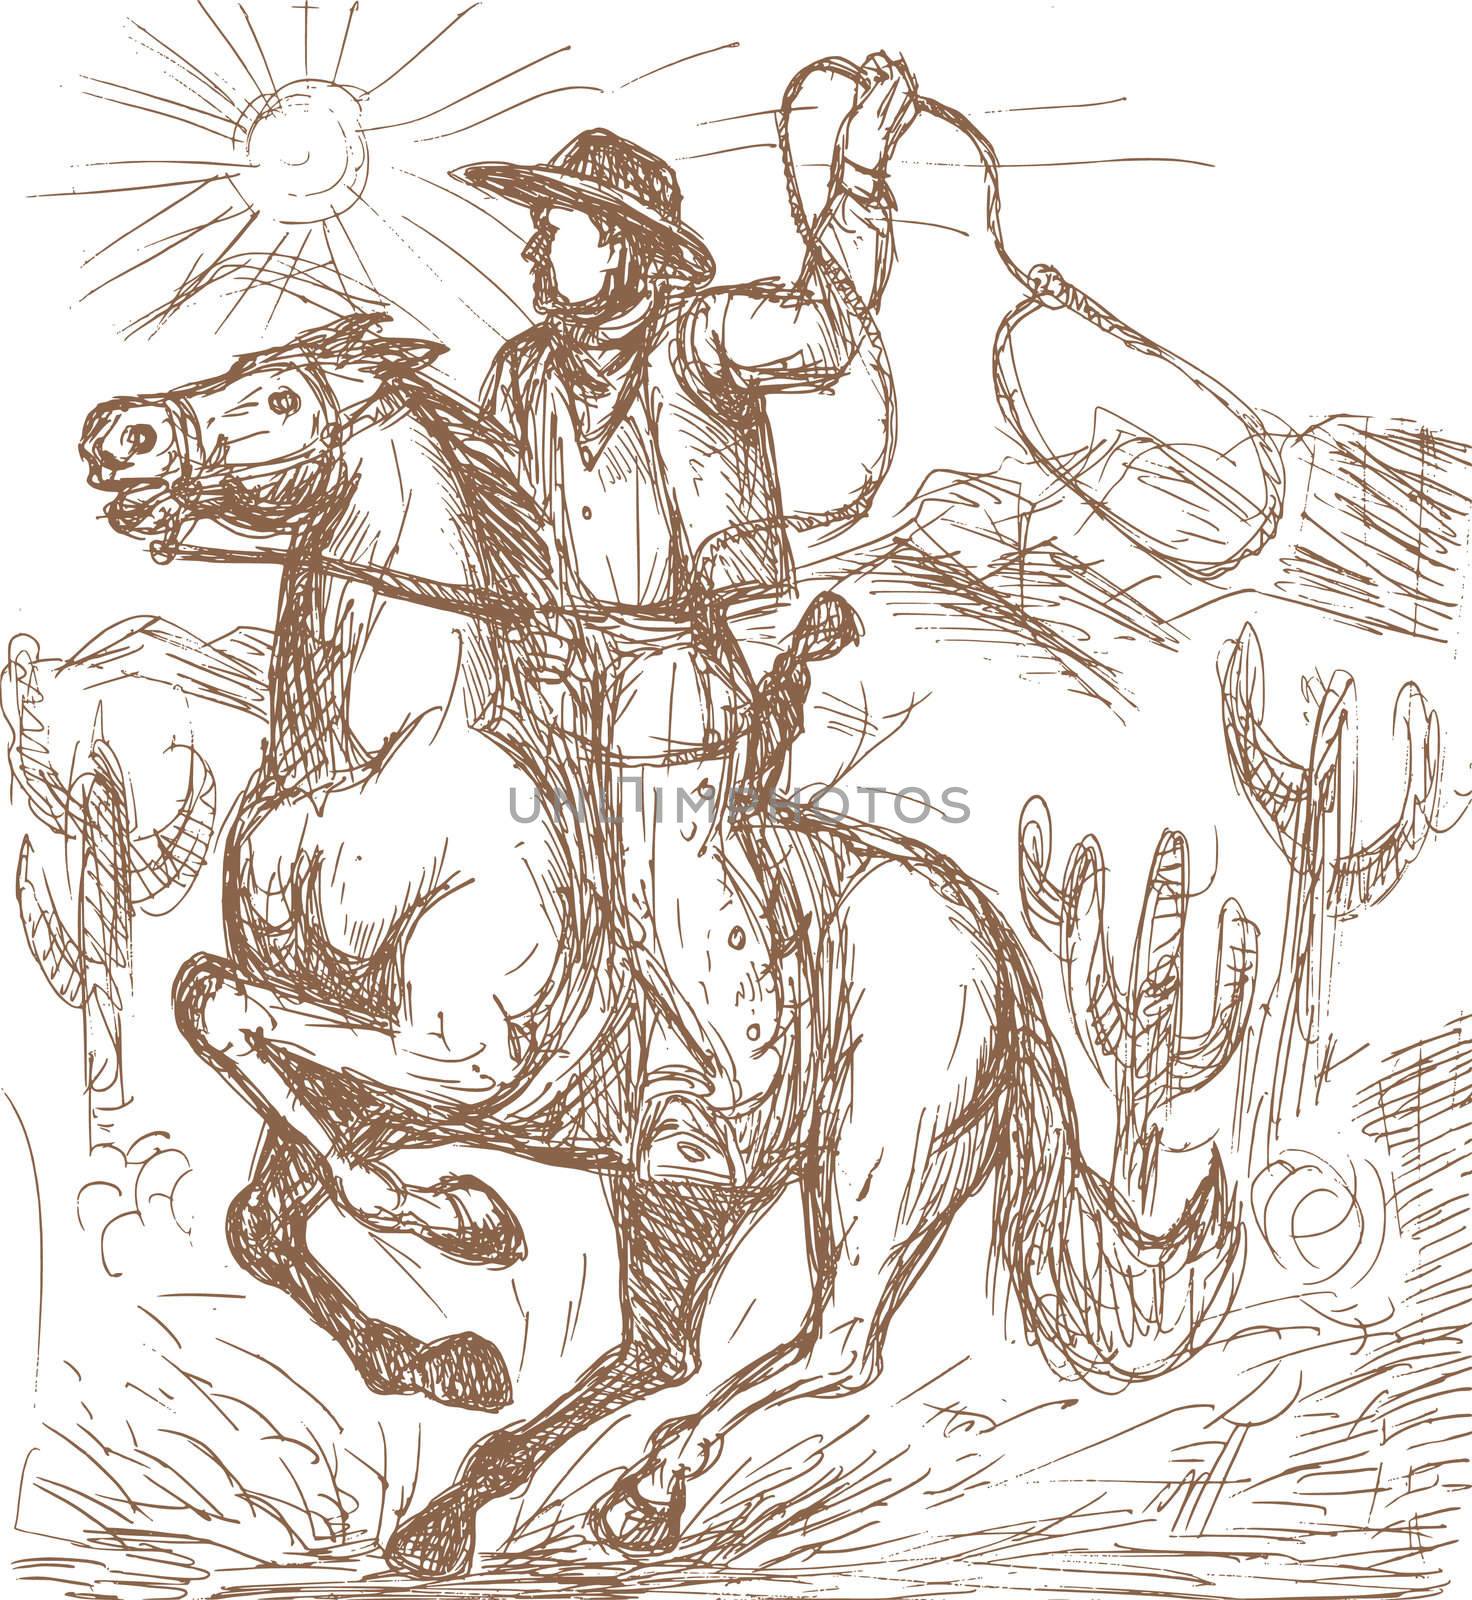 Cowboy with lasso riding a horse  by patrimonio